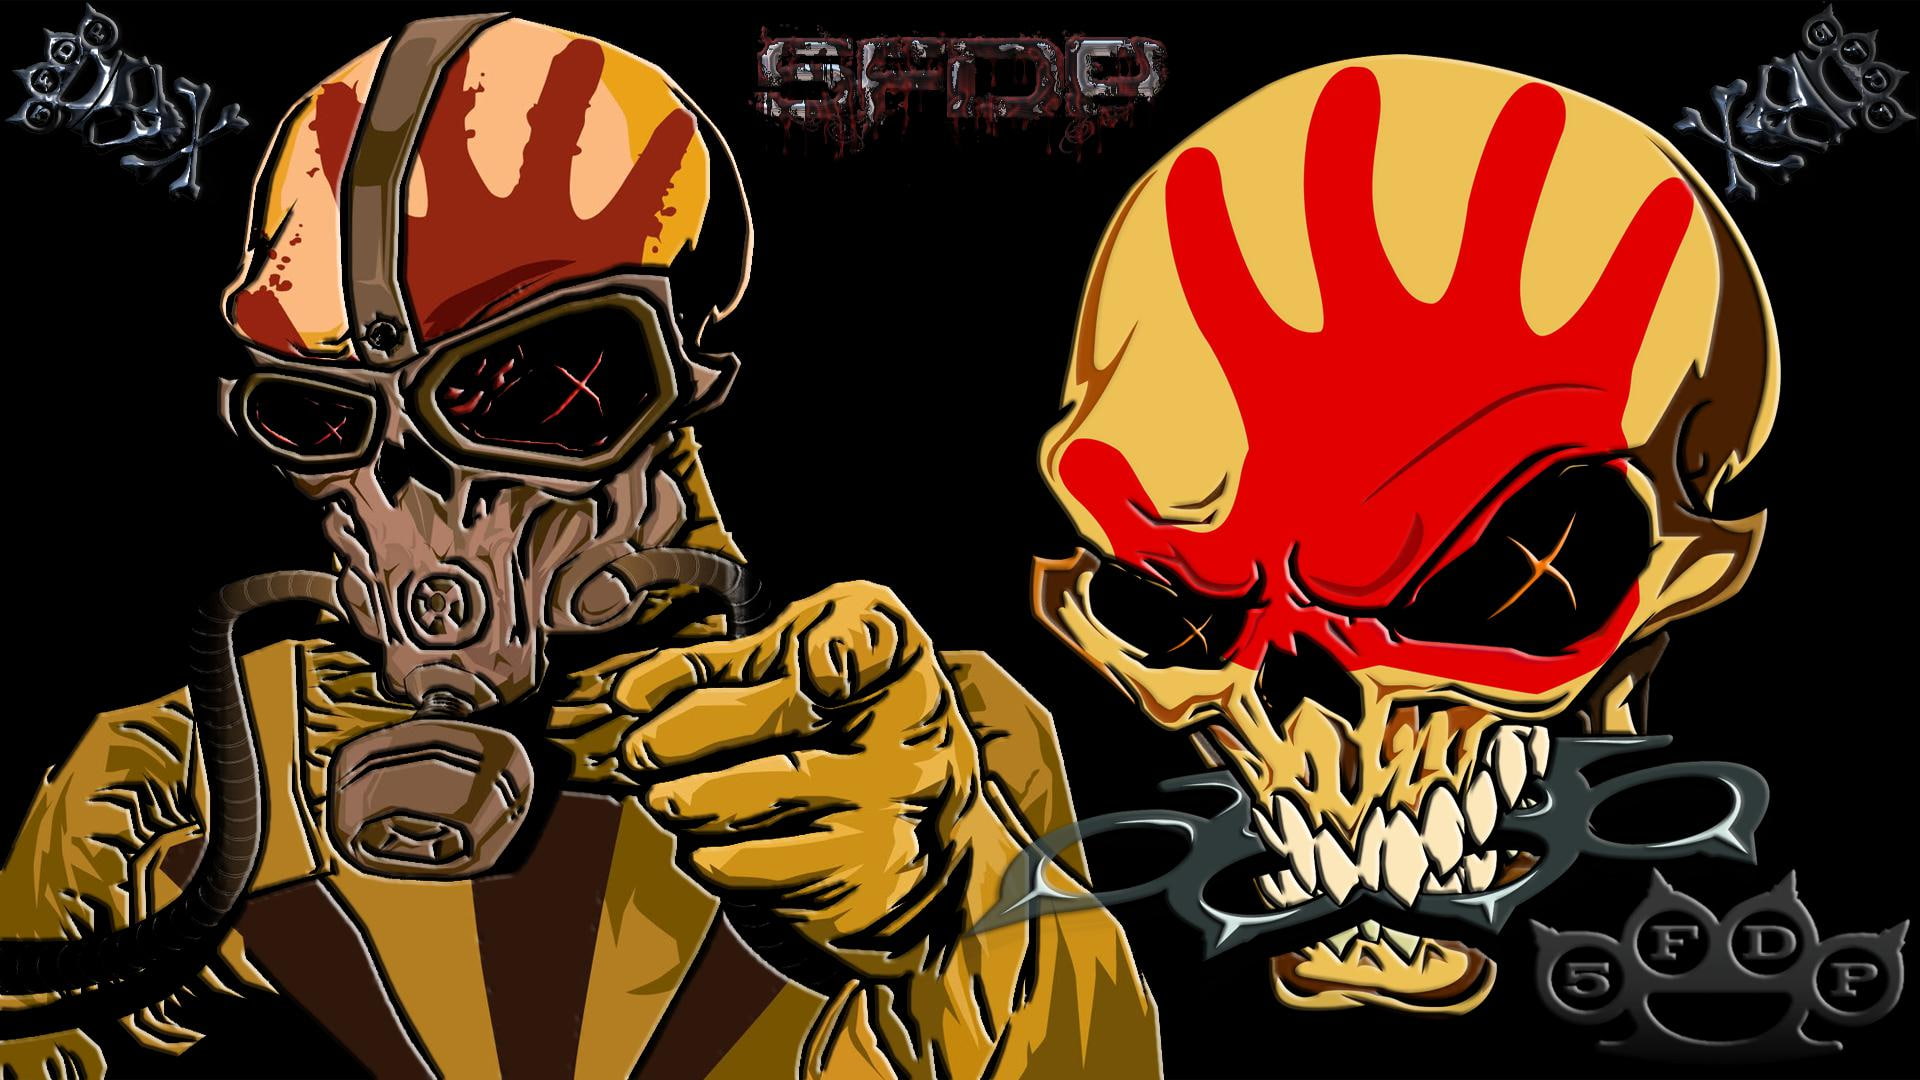 Finger Punch Heavy Metal Hard Rock Bands Skull Skulls Dark Free Background